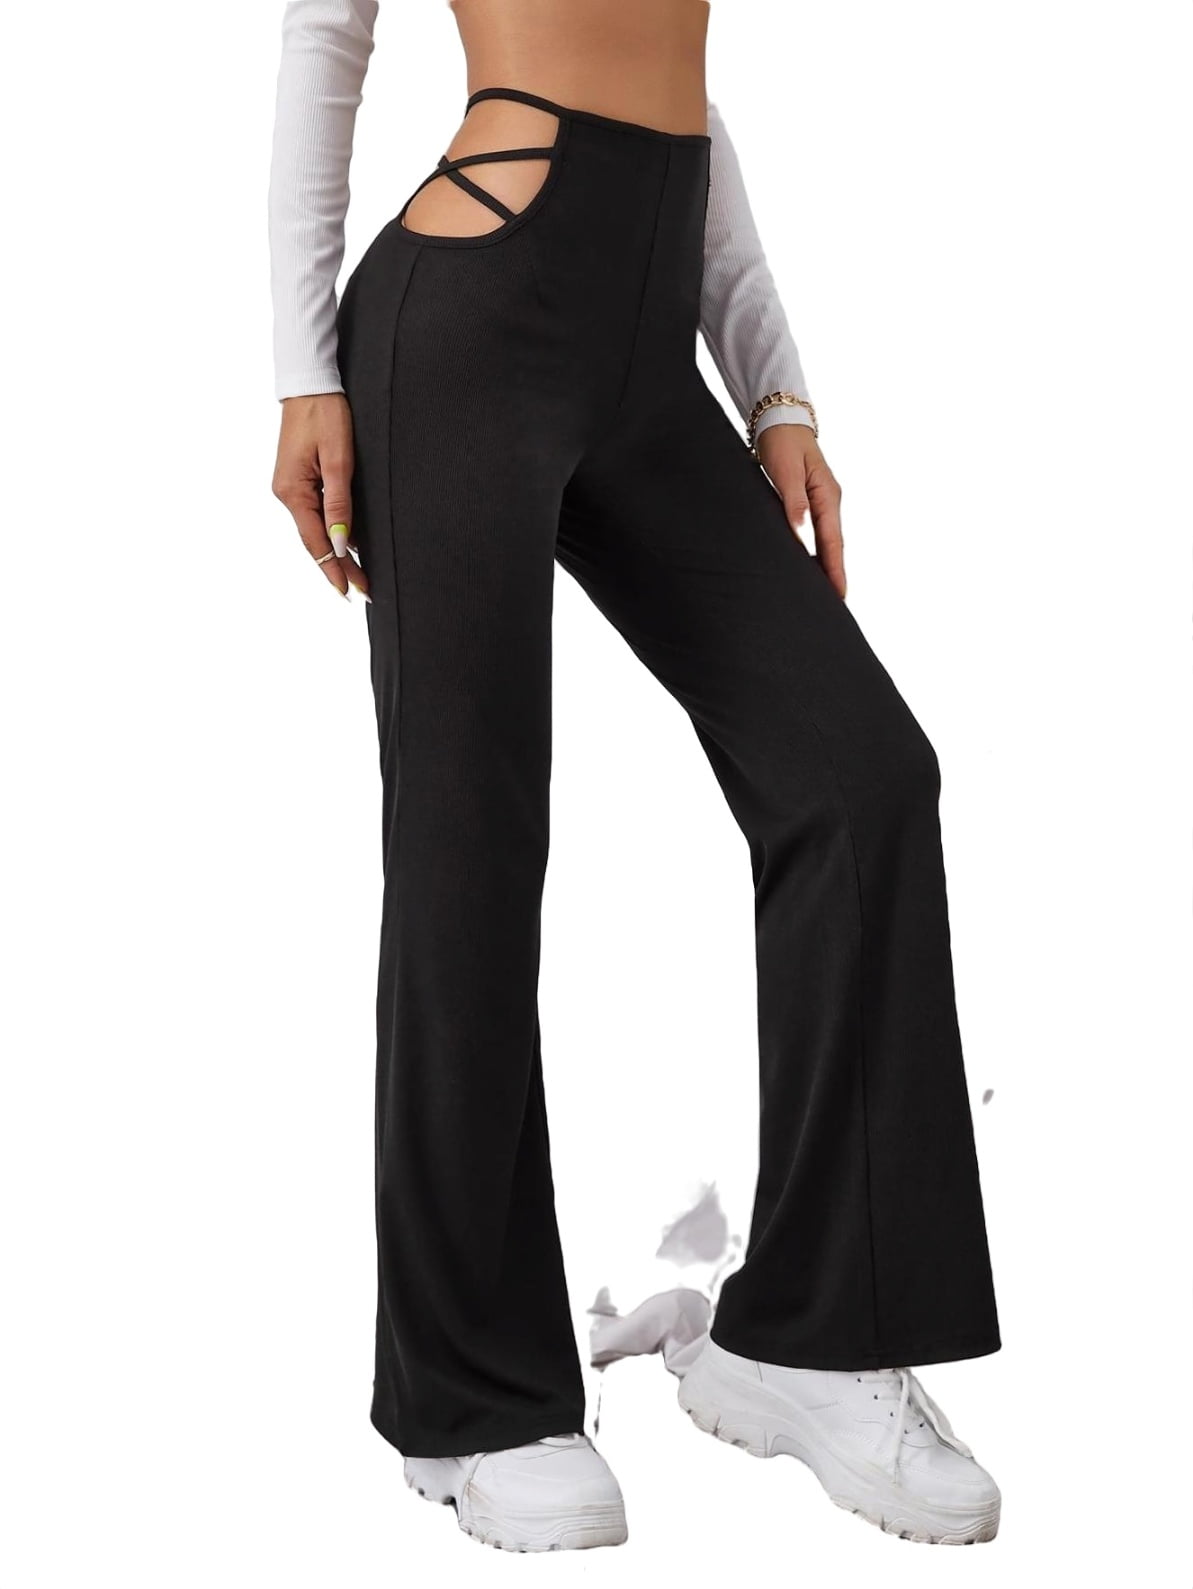 Women Lace Wide Leg Trousers Pants 3/4 Palazzo Side Slit Cropped High Waist  | eBay